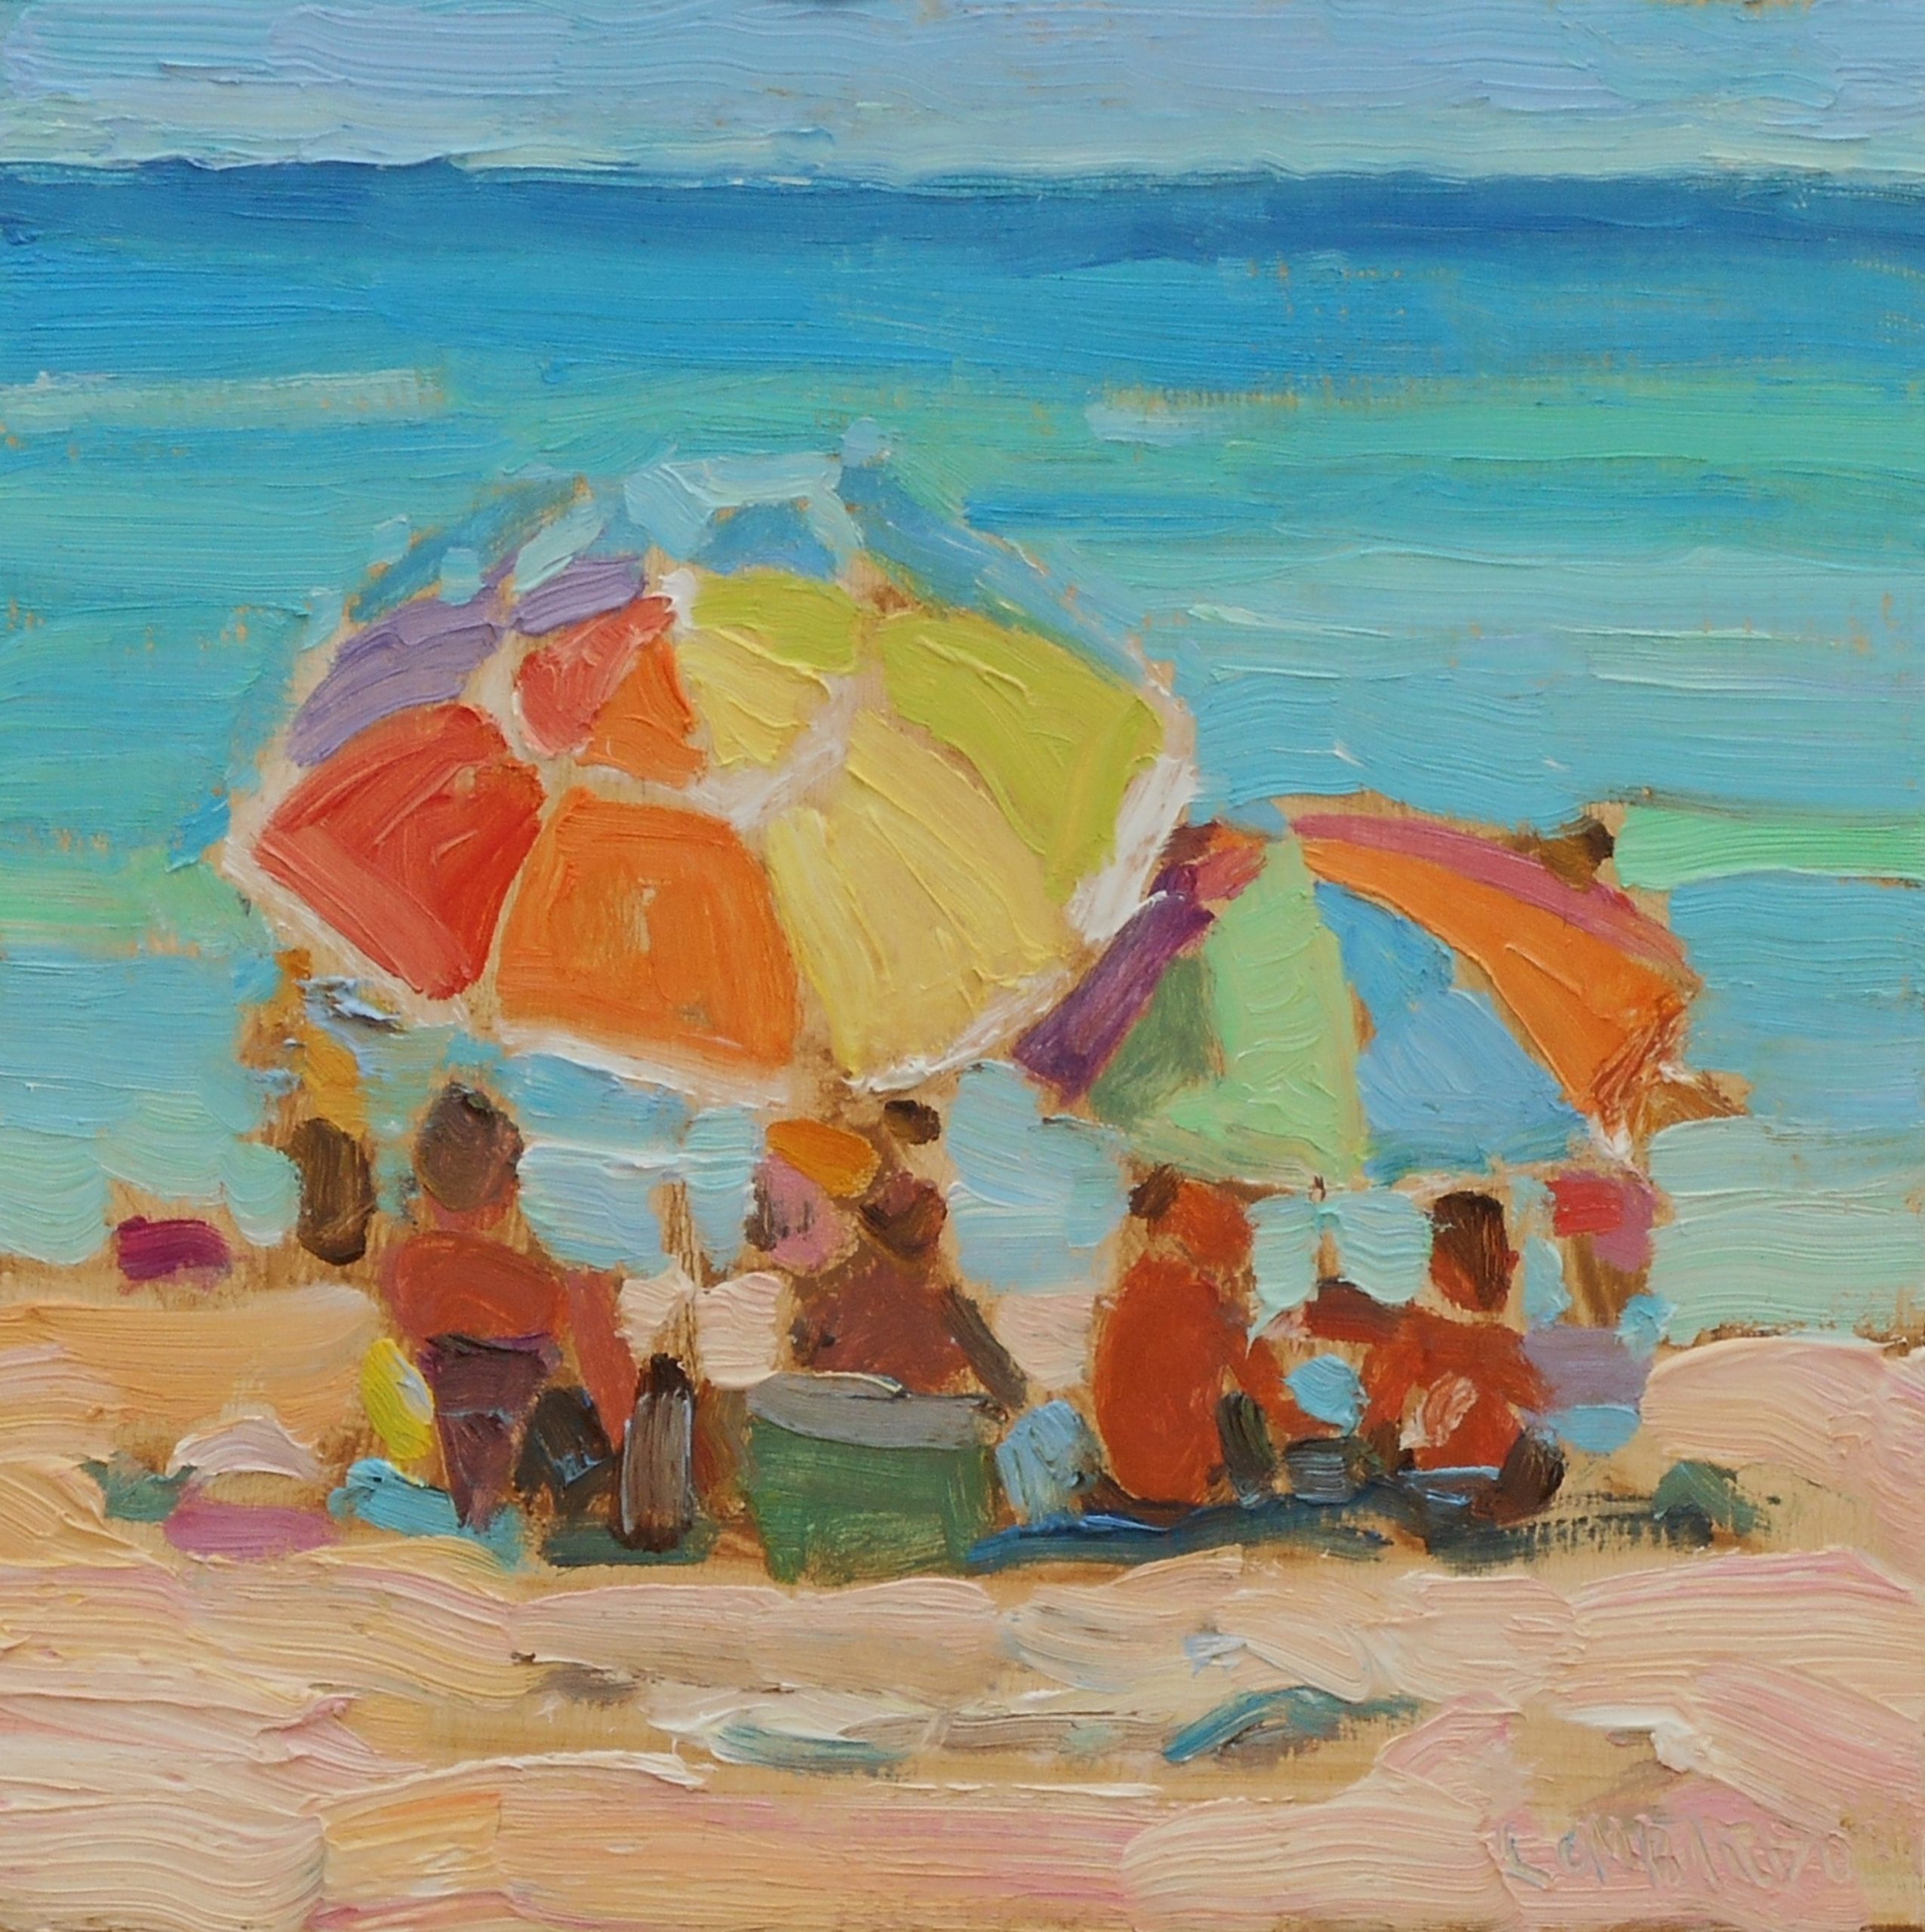 paintinf by Joseph Lombardo of colorful beach umbrella scene